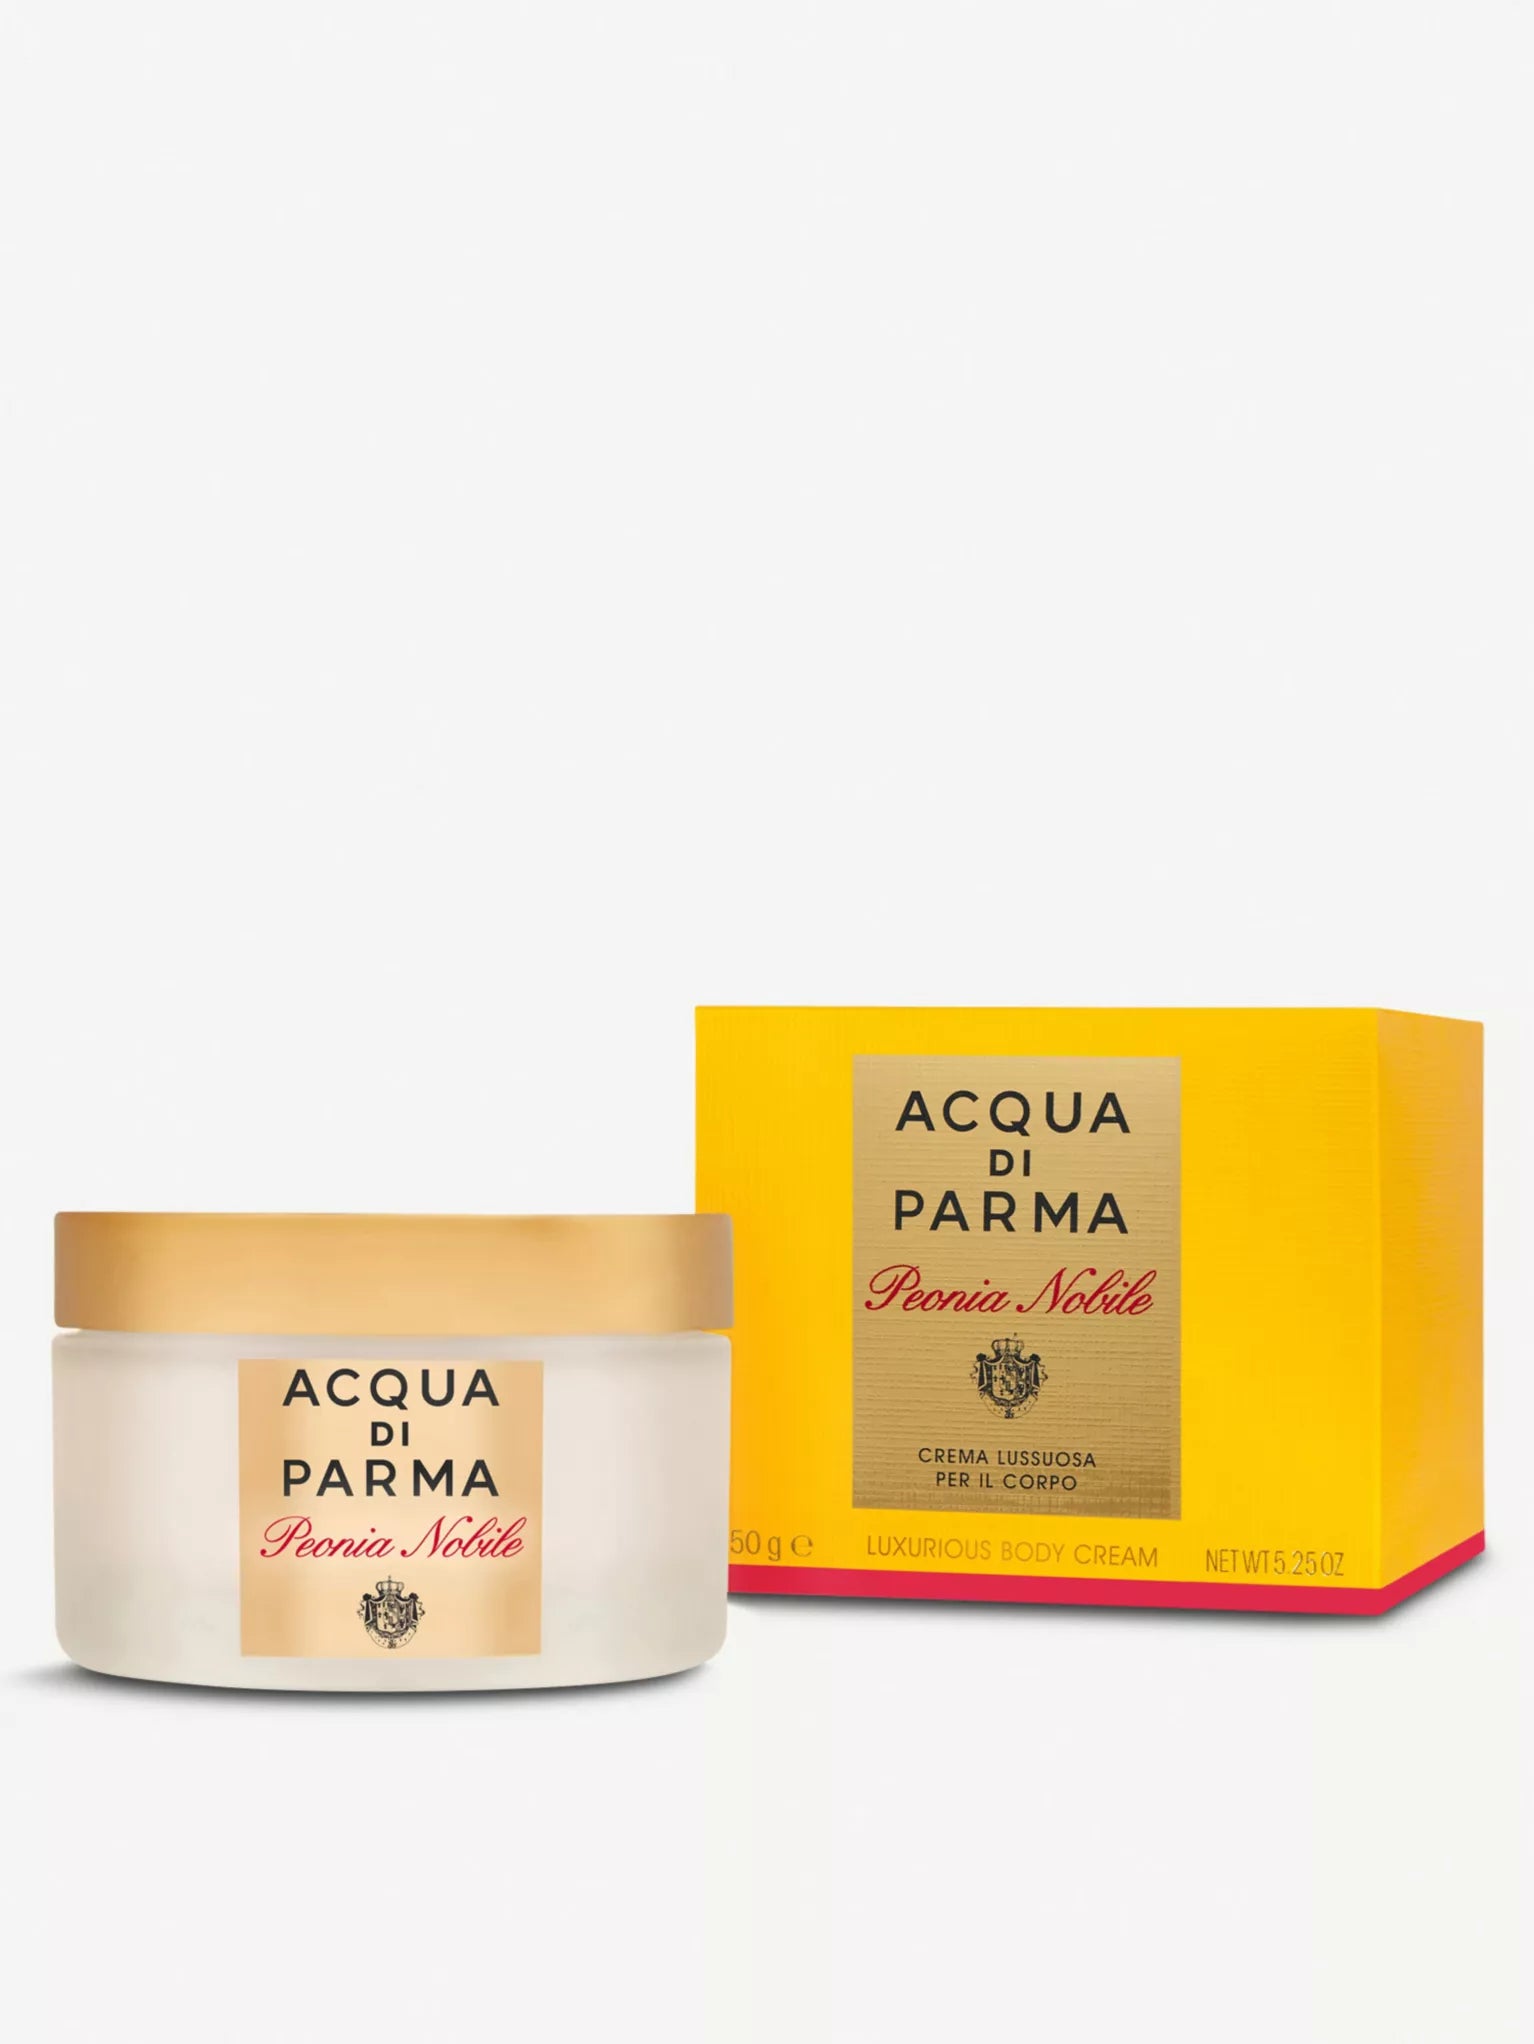 ACQUA DI PARMA
Peonia Nobile body cream 150ml